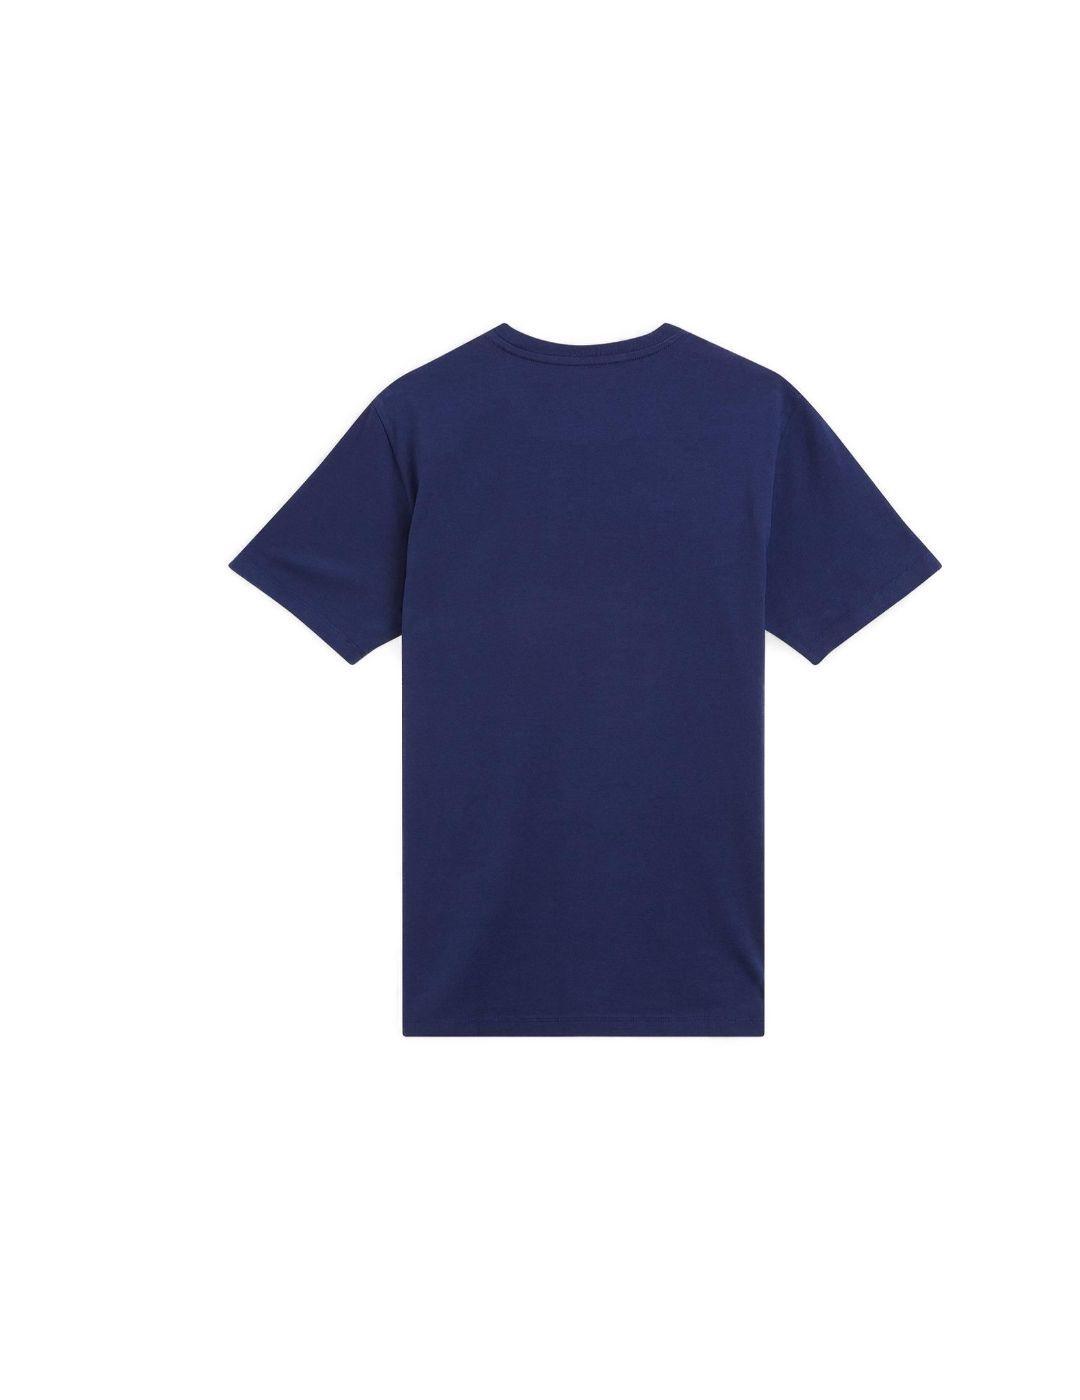 Camiseta Levi's Lava azul marino para hombre -a